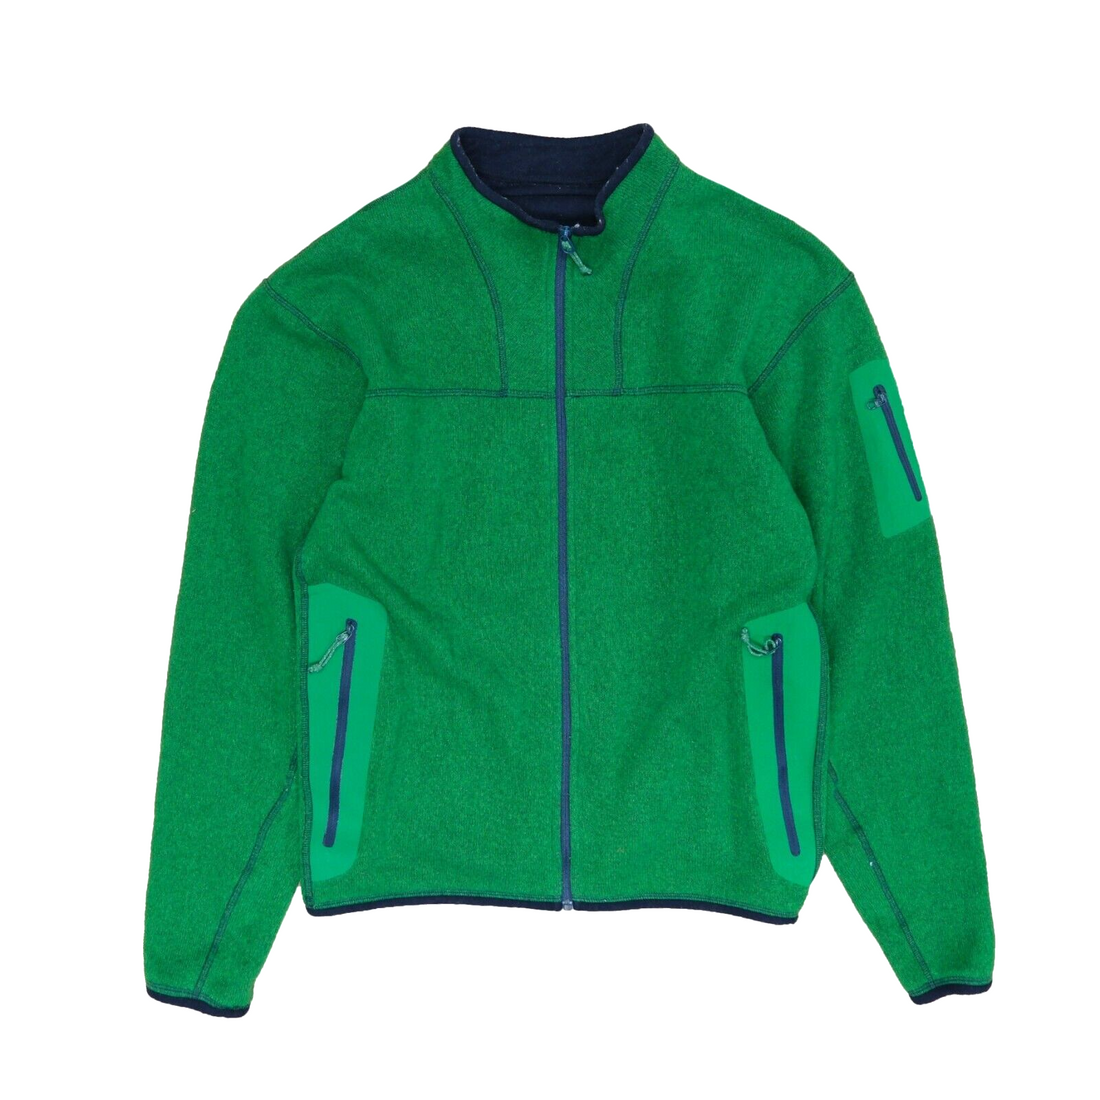 Arc'teryx Covert Hoody Fleece Jacket Size Large Green Full Zip